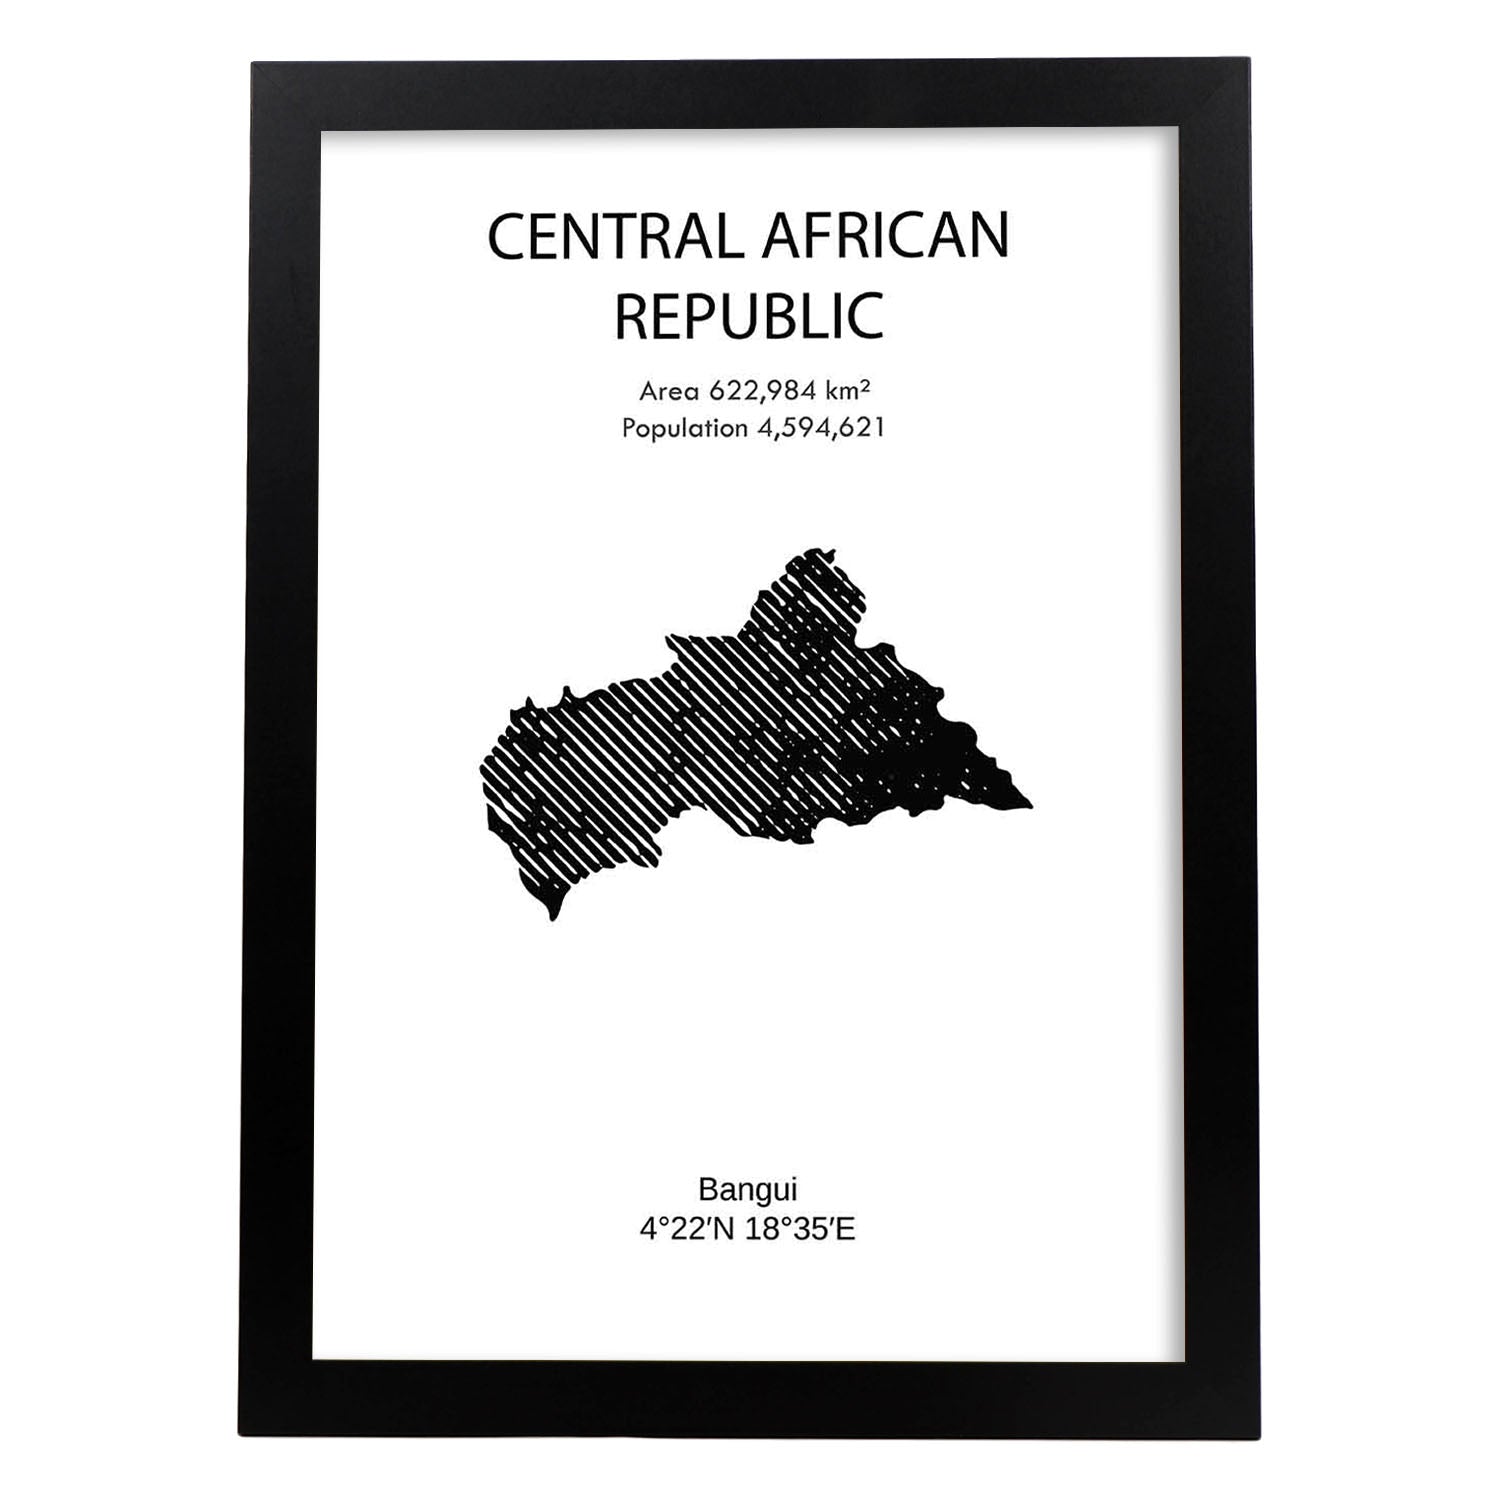 Poster de Africa central. Láminas de paises y continentes del mundo.-Artwork-Nacnic-A3-Marco Negro-Nacnic Estudio SL